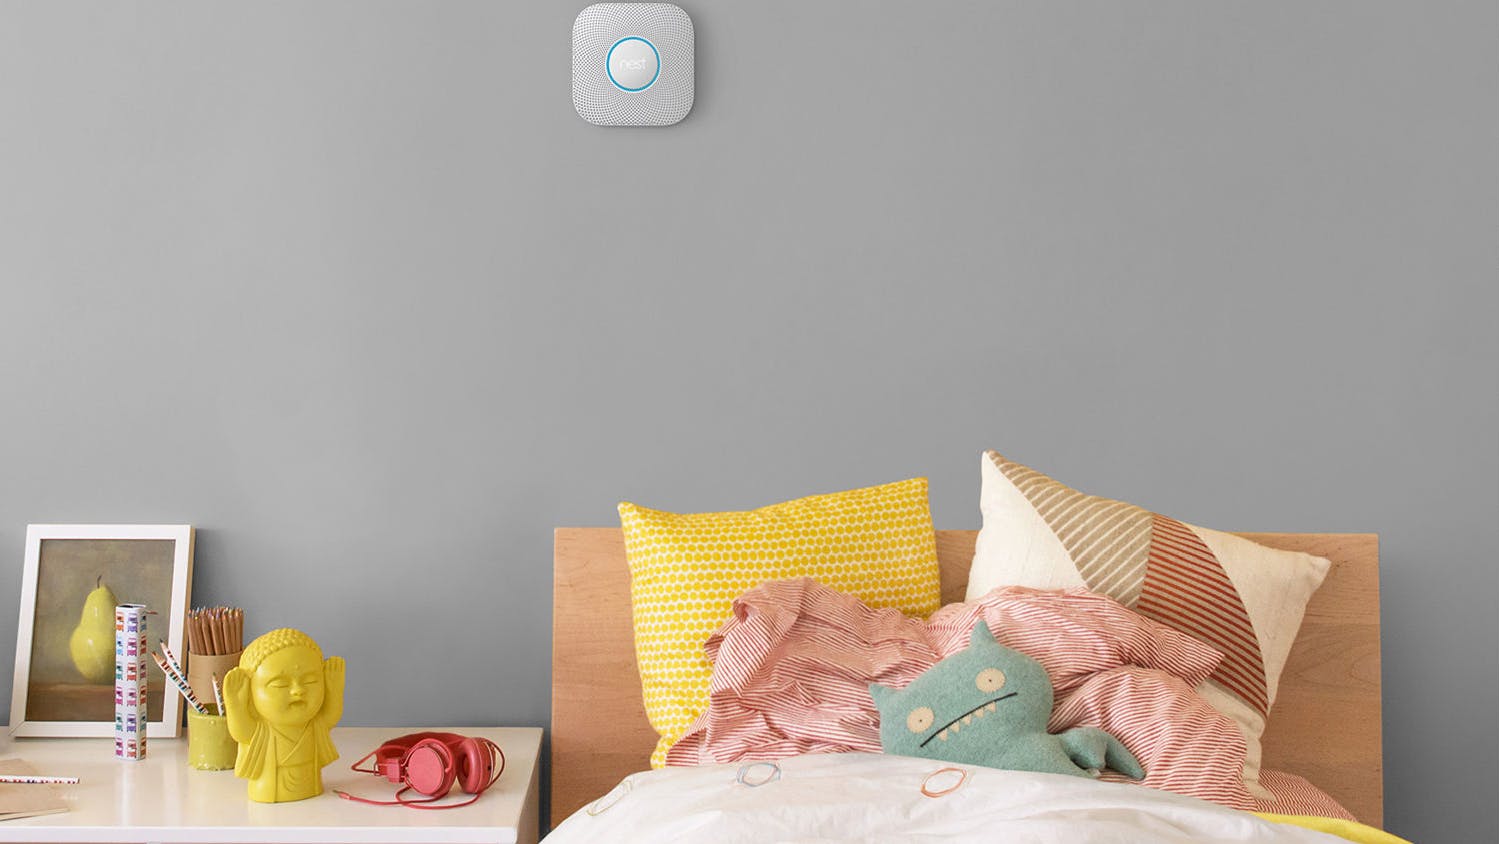 Google Nest Protect Smoke + CO Alarm